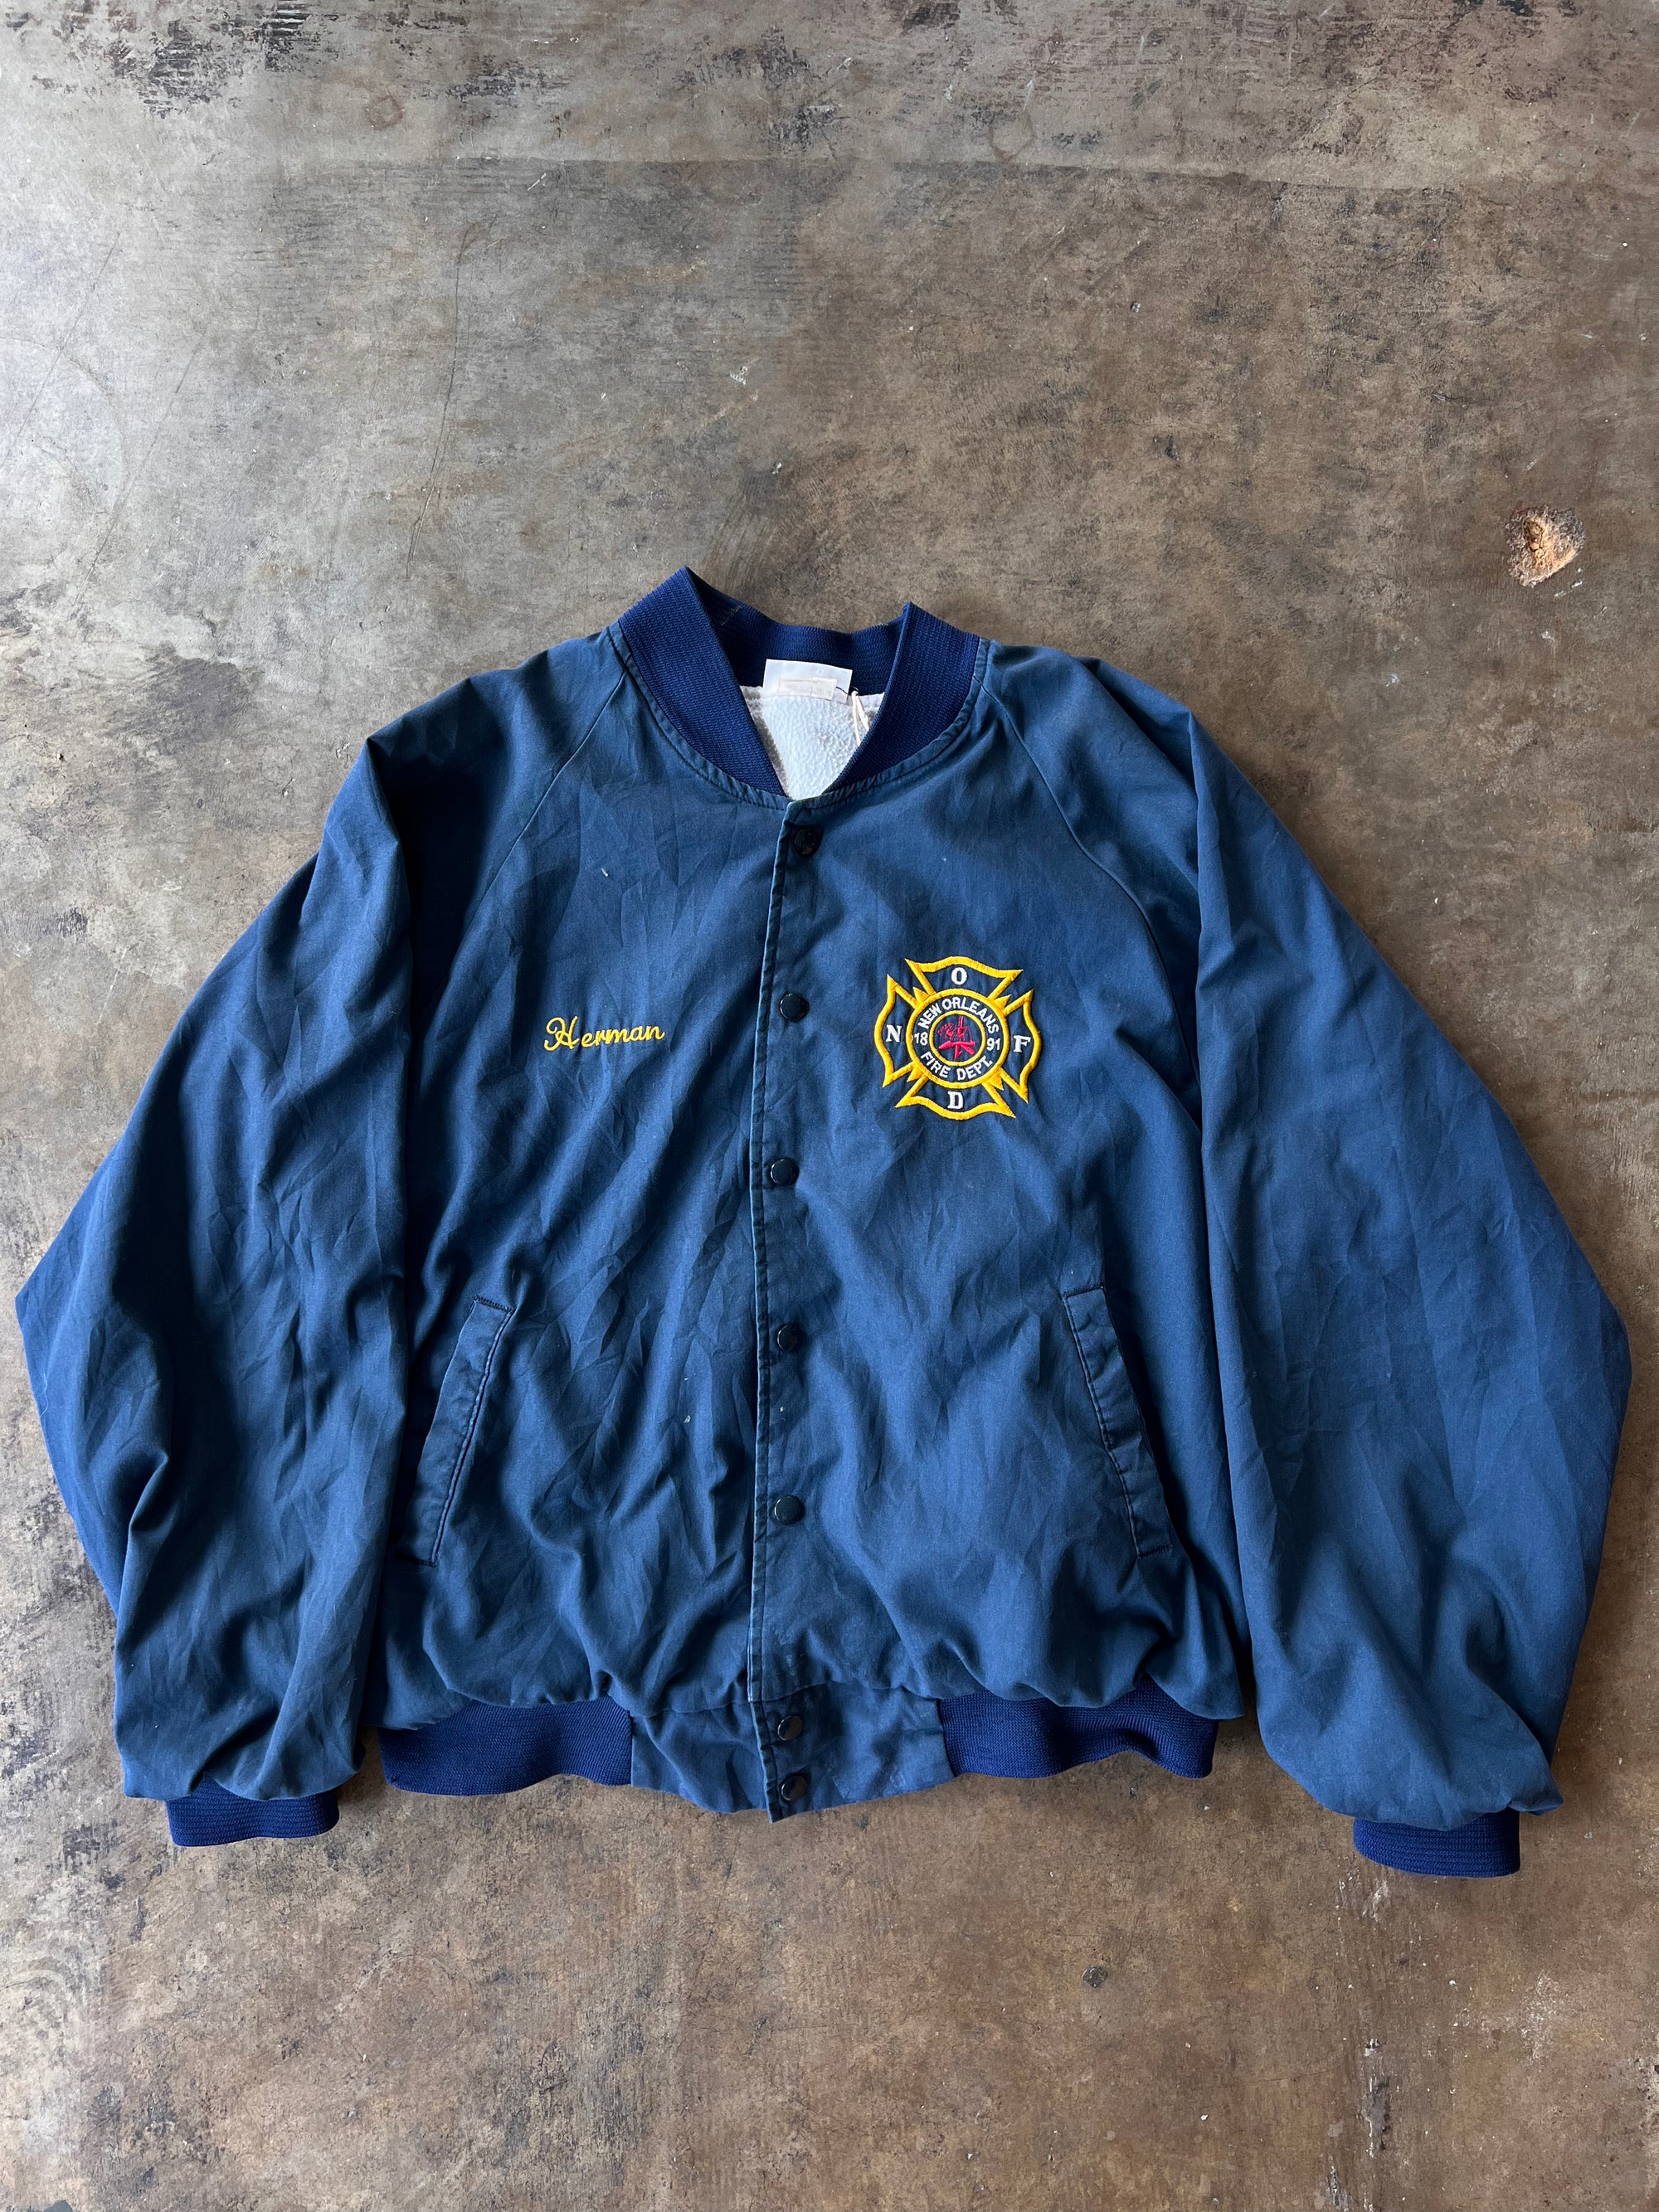 Vintage New Orleans Fire Dept Club Jacket